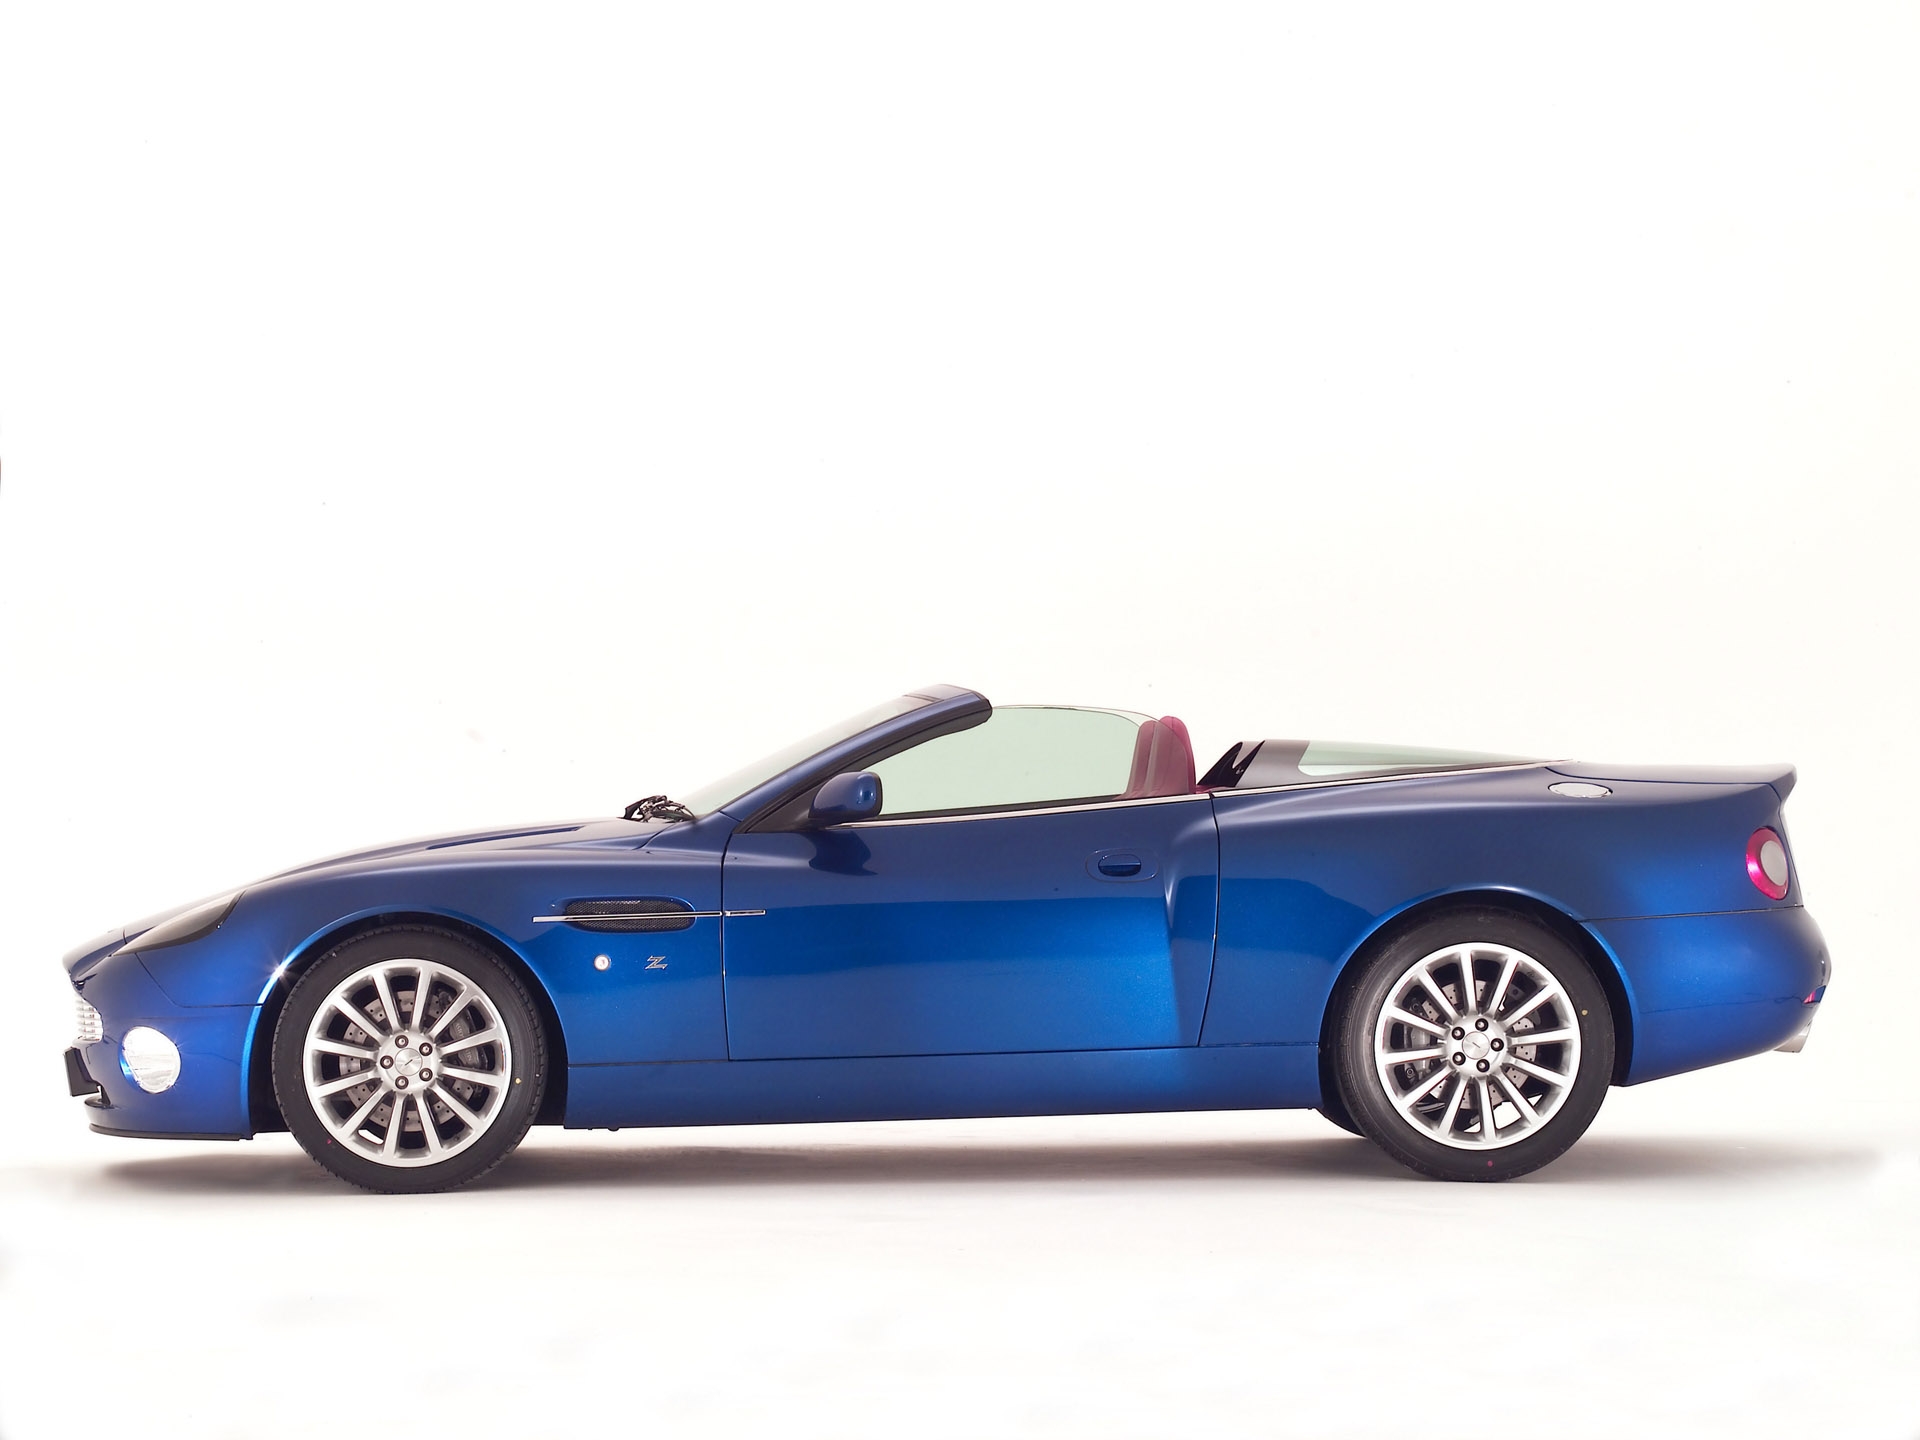 aston martin, auto, cars, blue, side view, style, 2004, v12, vanquish FHD, 4K, UHD